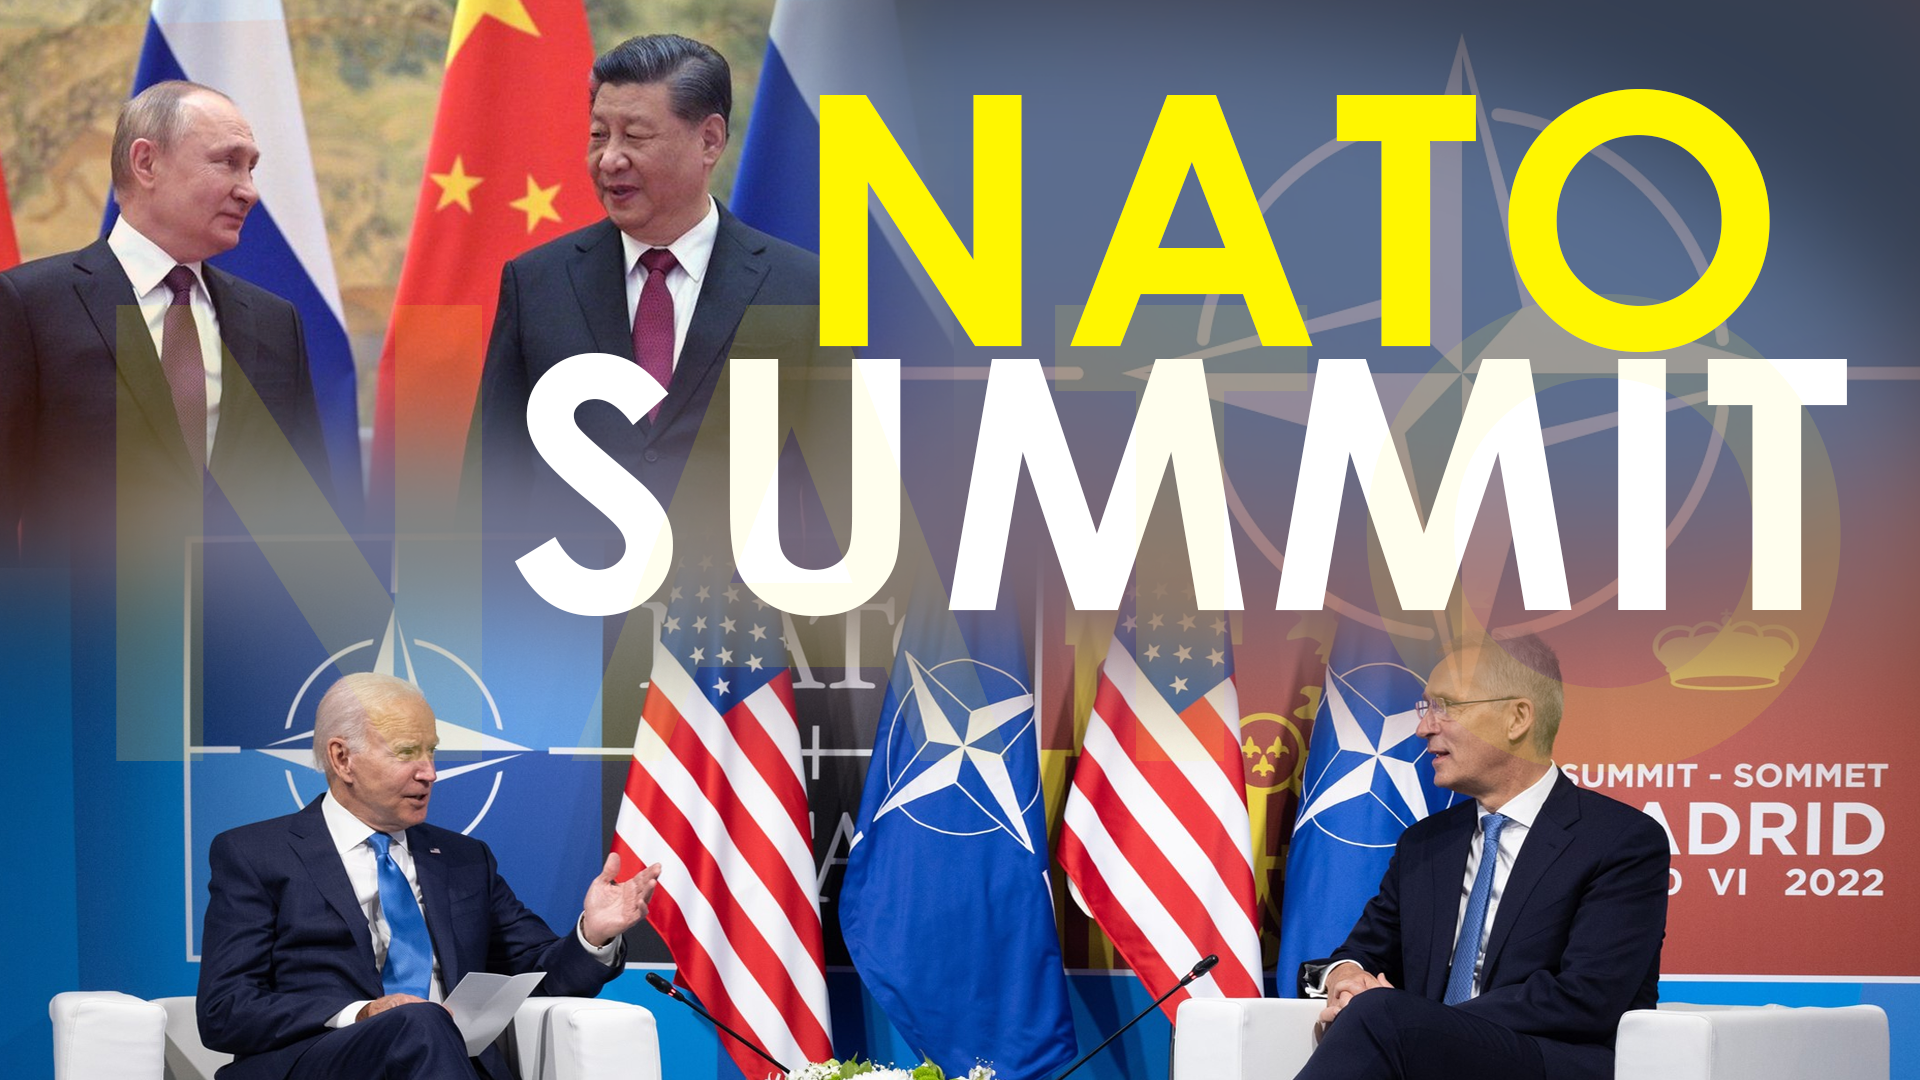 NATO summit ends